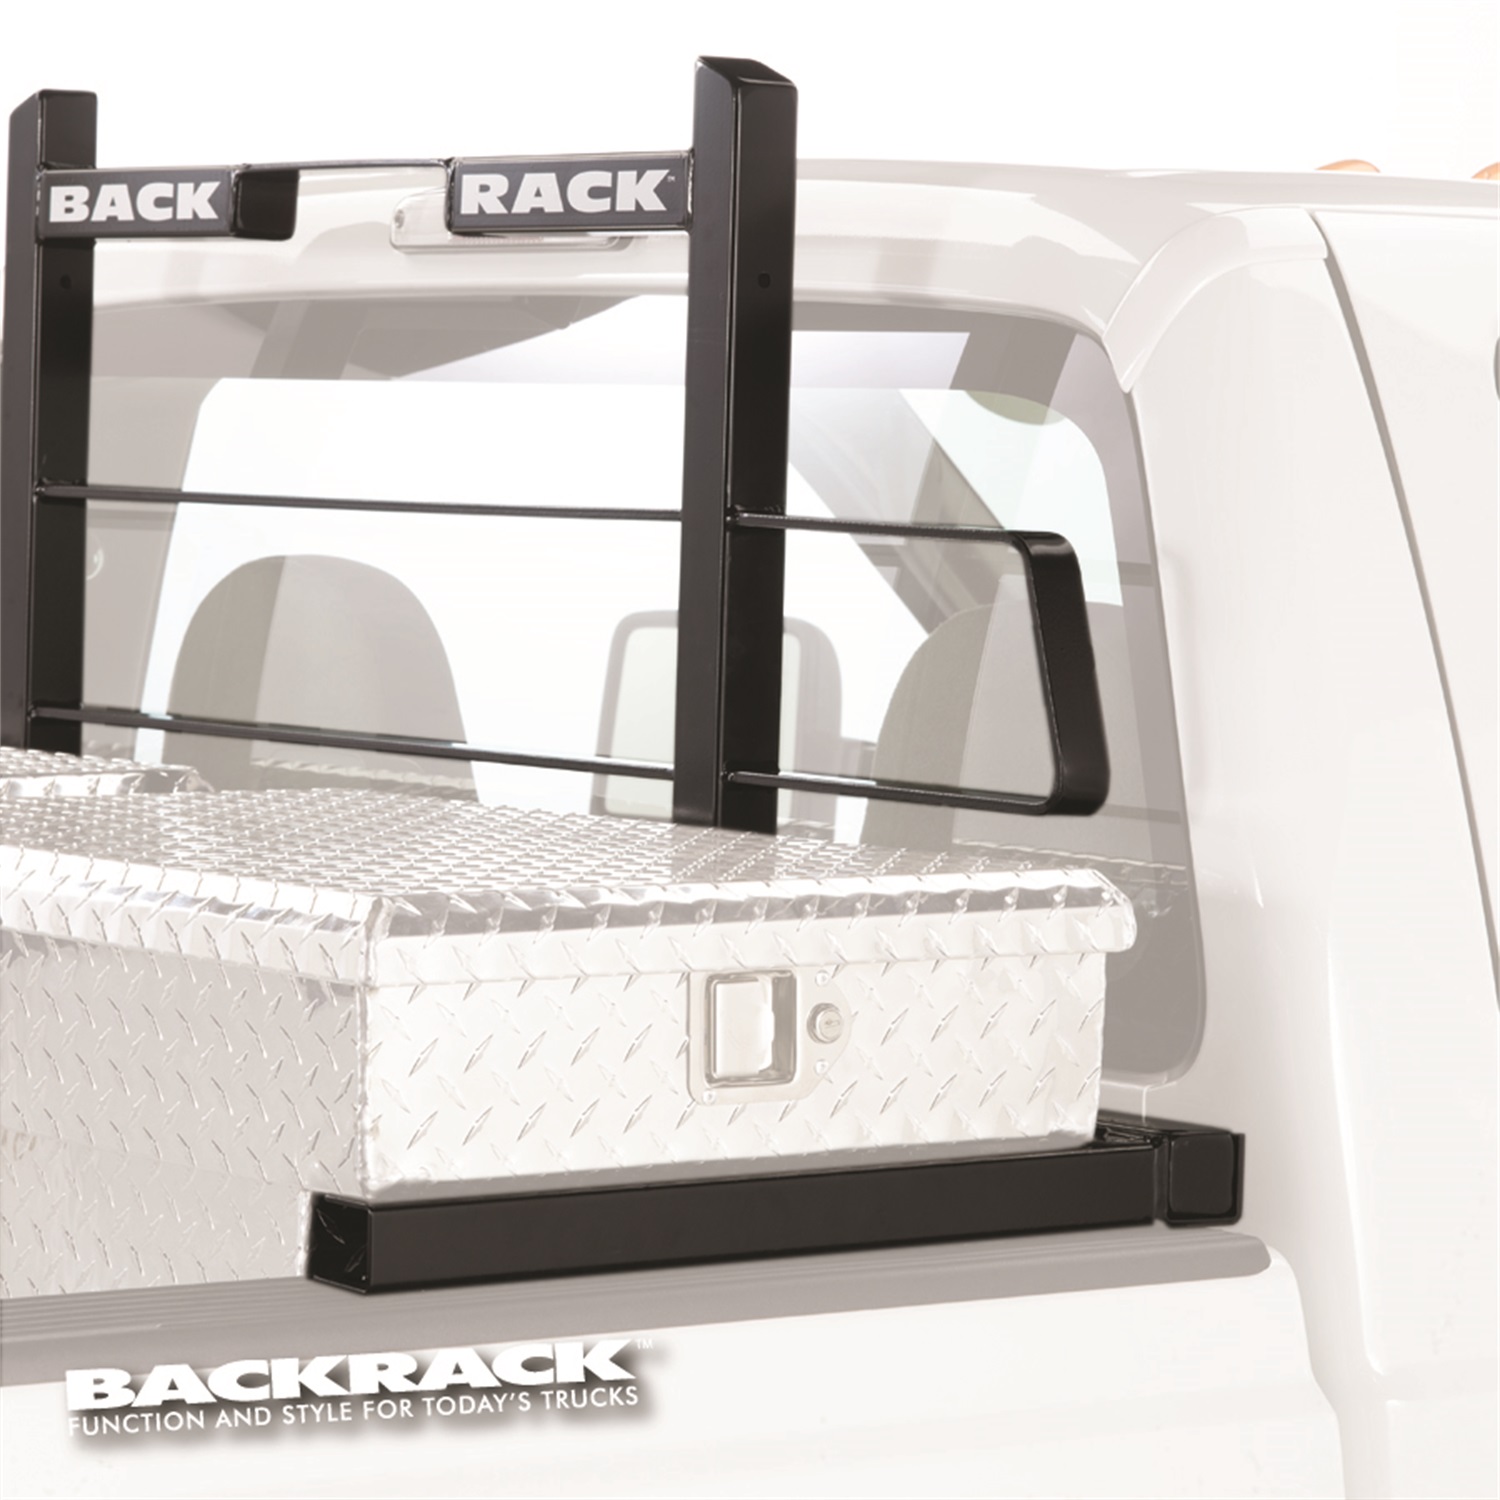 Backrack Backrack 10313TB Original Backrack Kit Fits 97-04 Dakota Tacoma